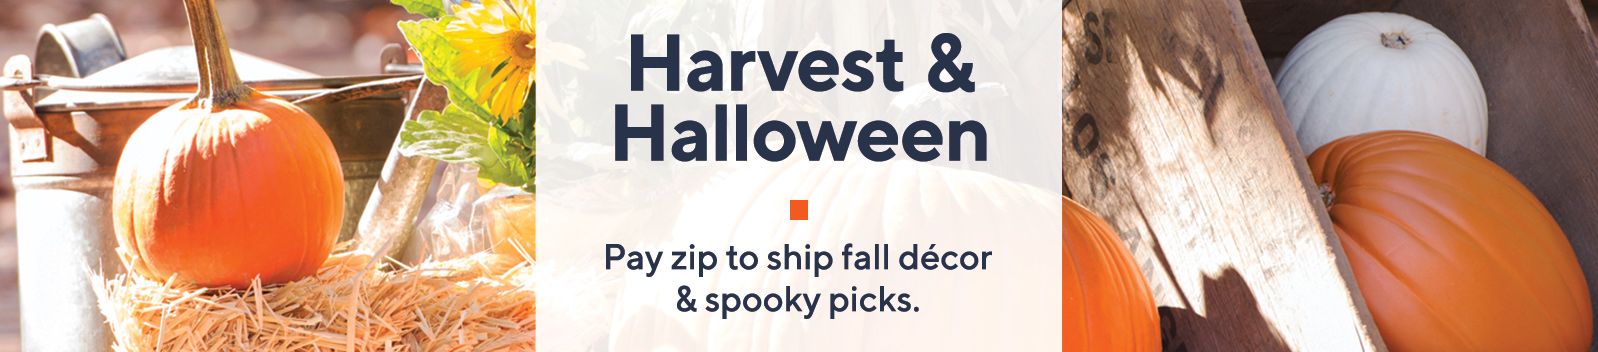 Harvest & Halloween  Pay zip to ship fall décor & spooky picks.